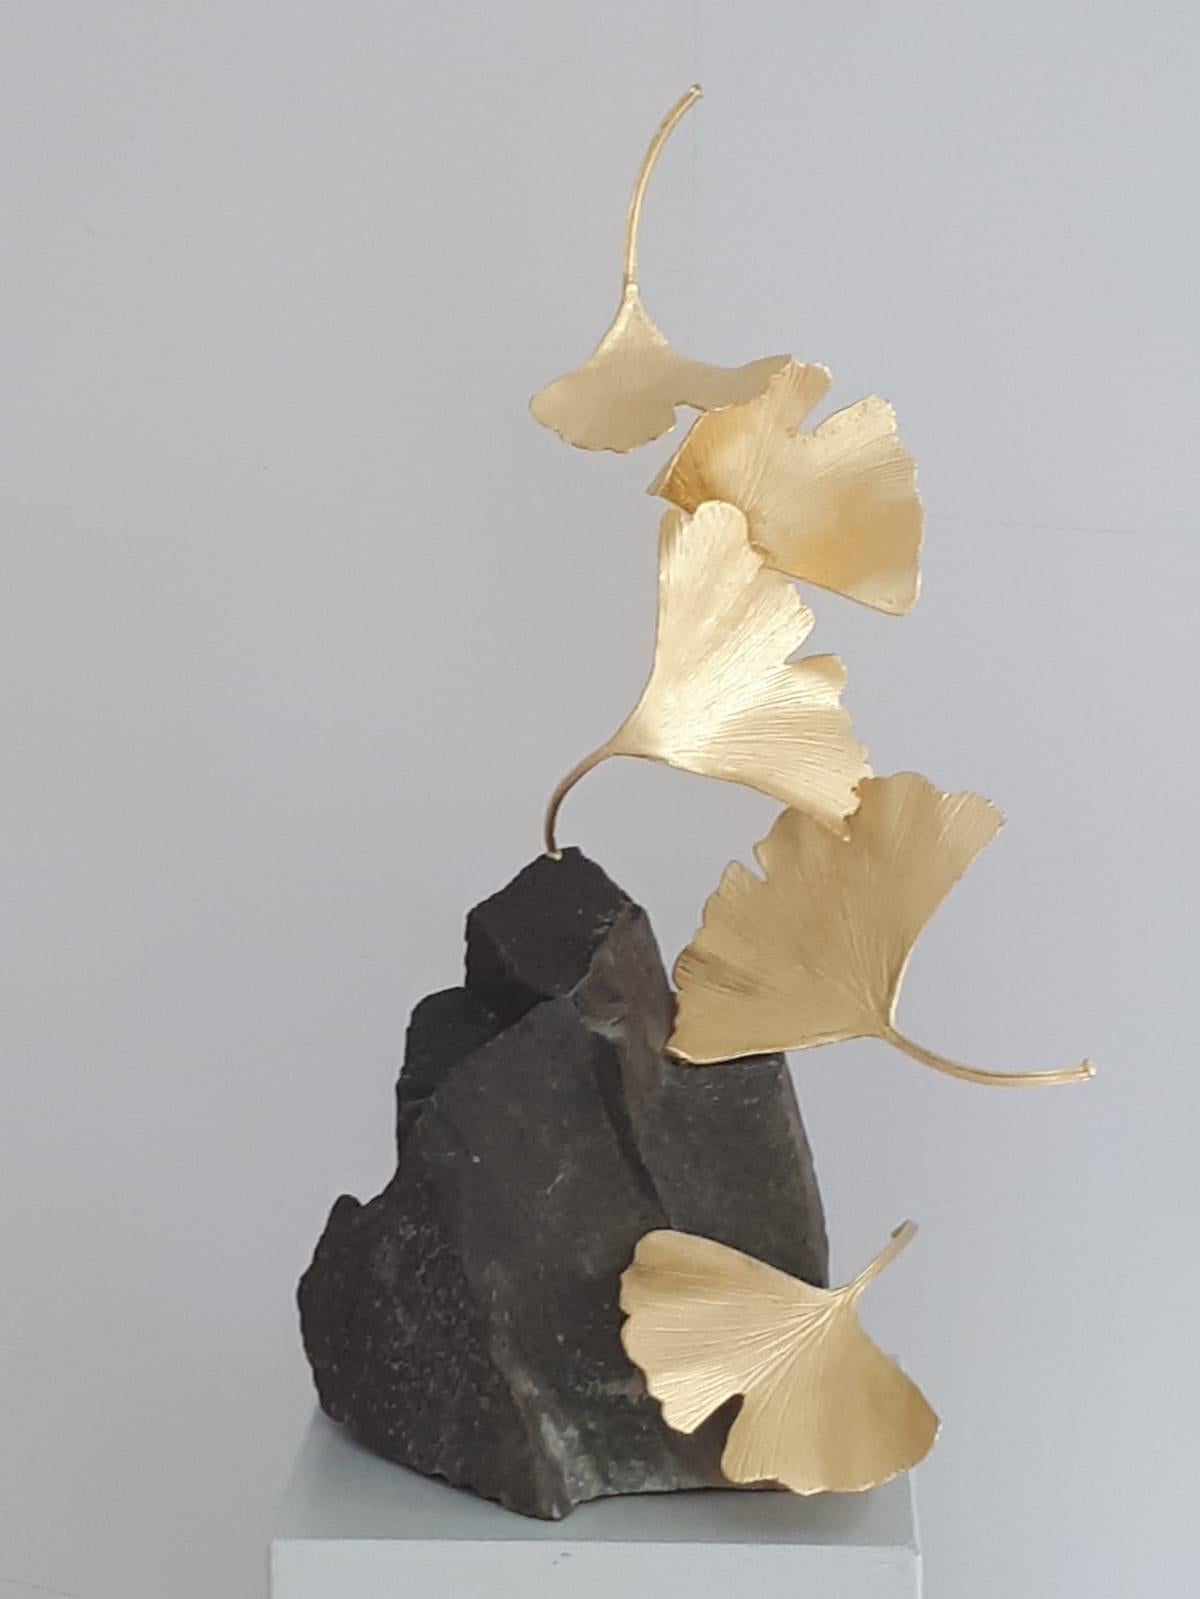 Gingko 5 Leaf Stone de Kuno Vollet - Sculpture Gingko en laiton doré sur base en pierre